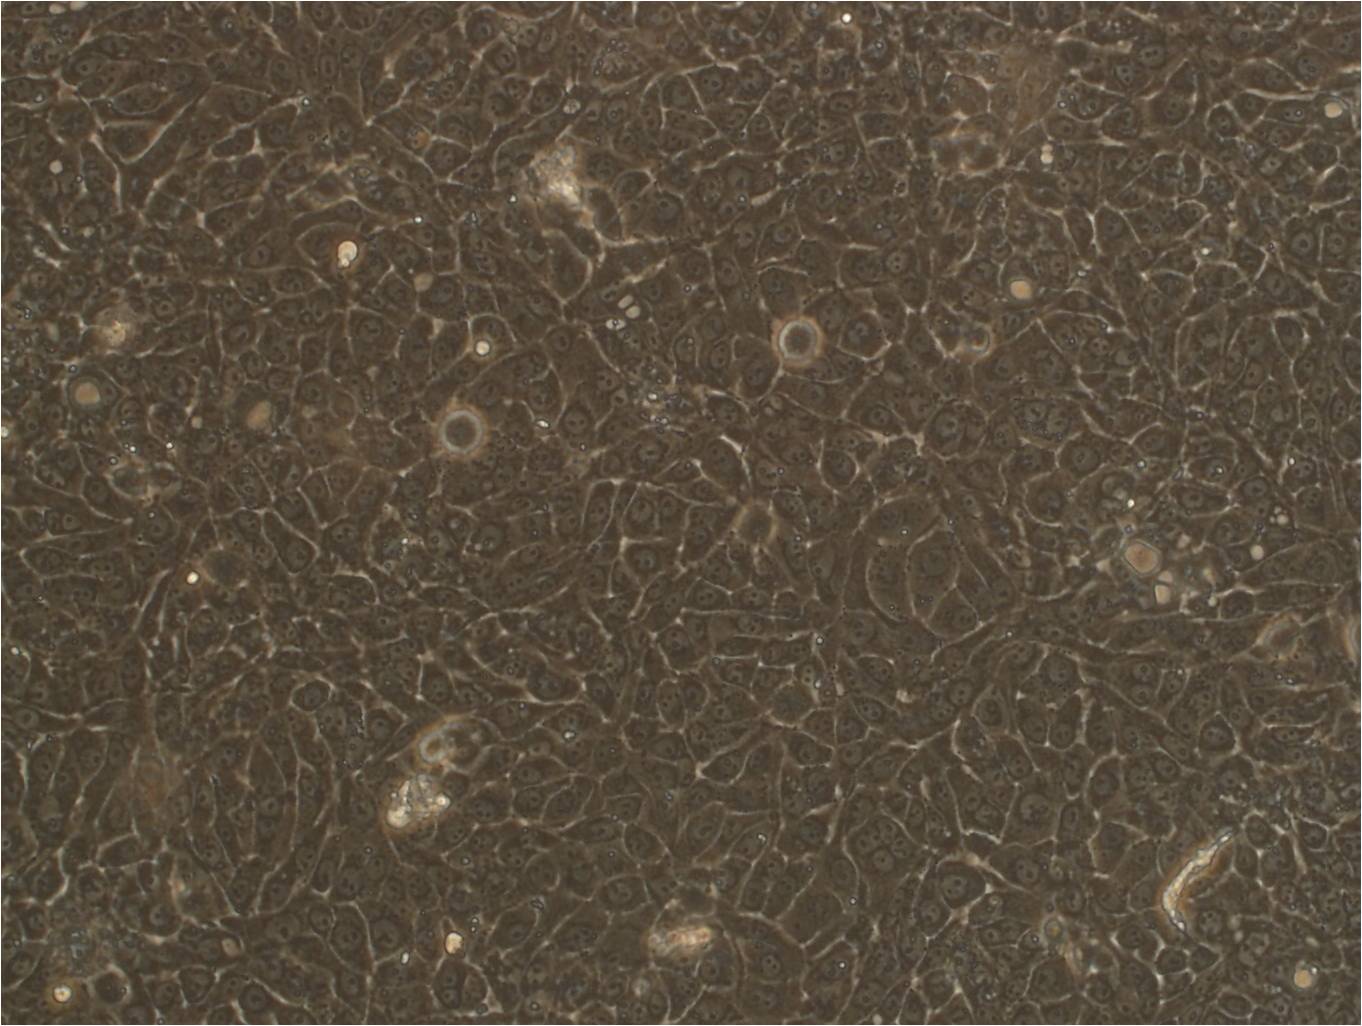 HTR-8/SVneo cell line人绒毛膜滋养层细胞系